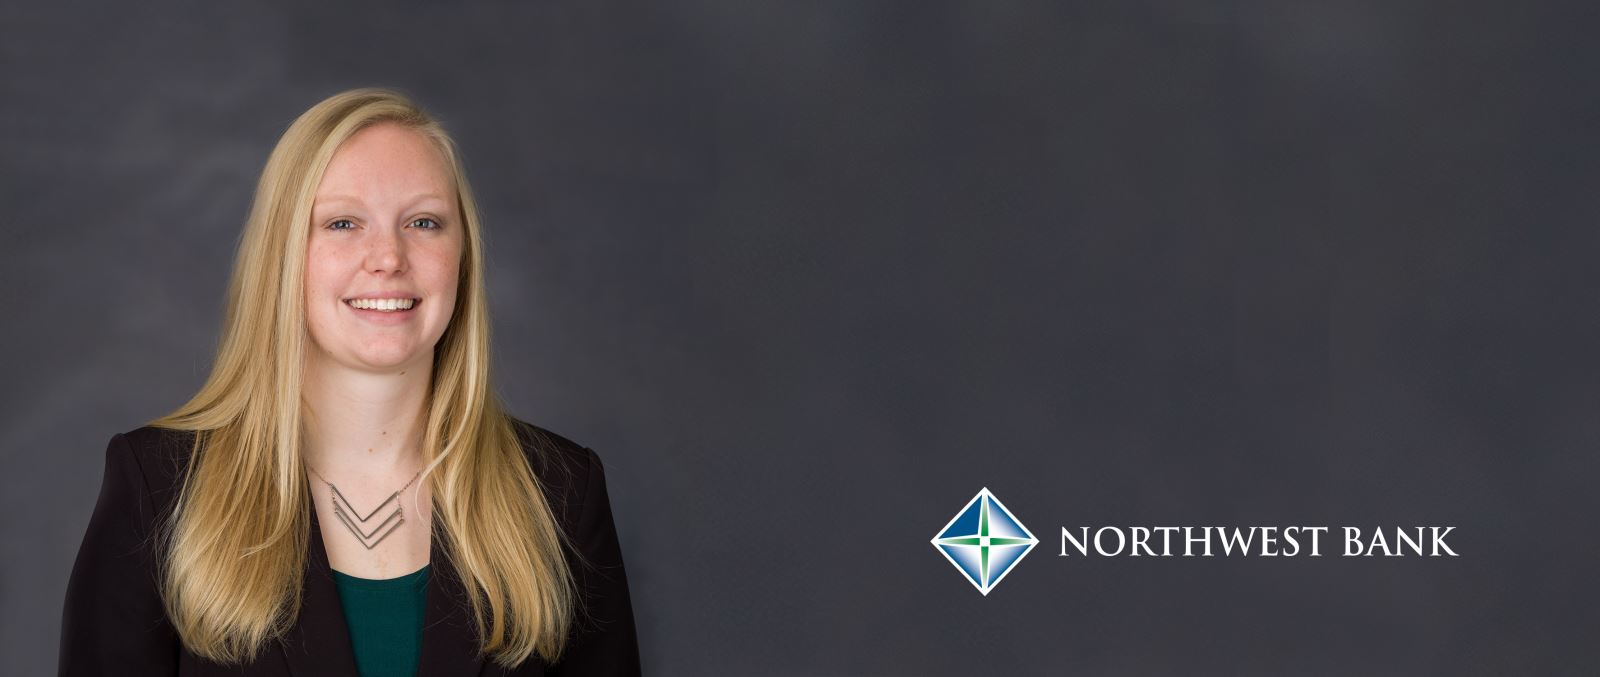 image of Stephanie Marco and Northwest Bank logo